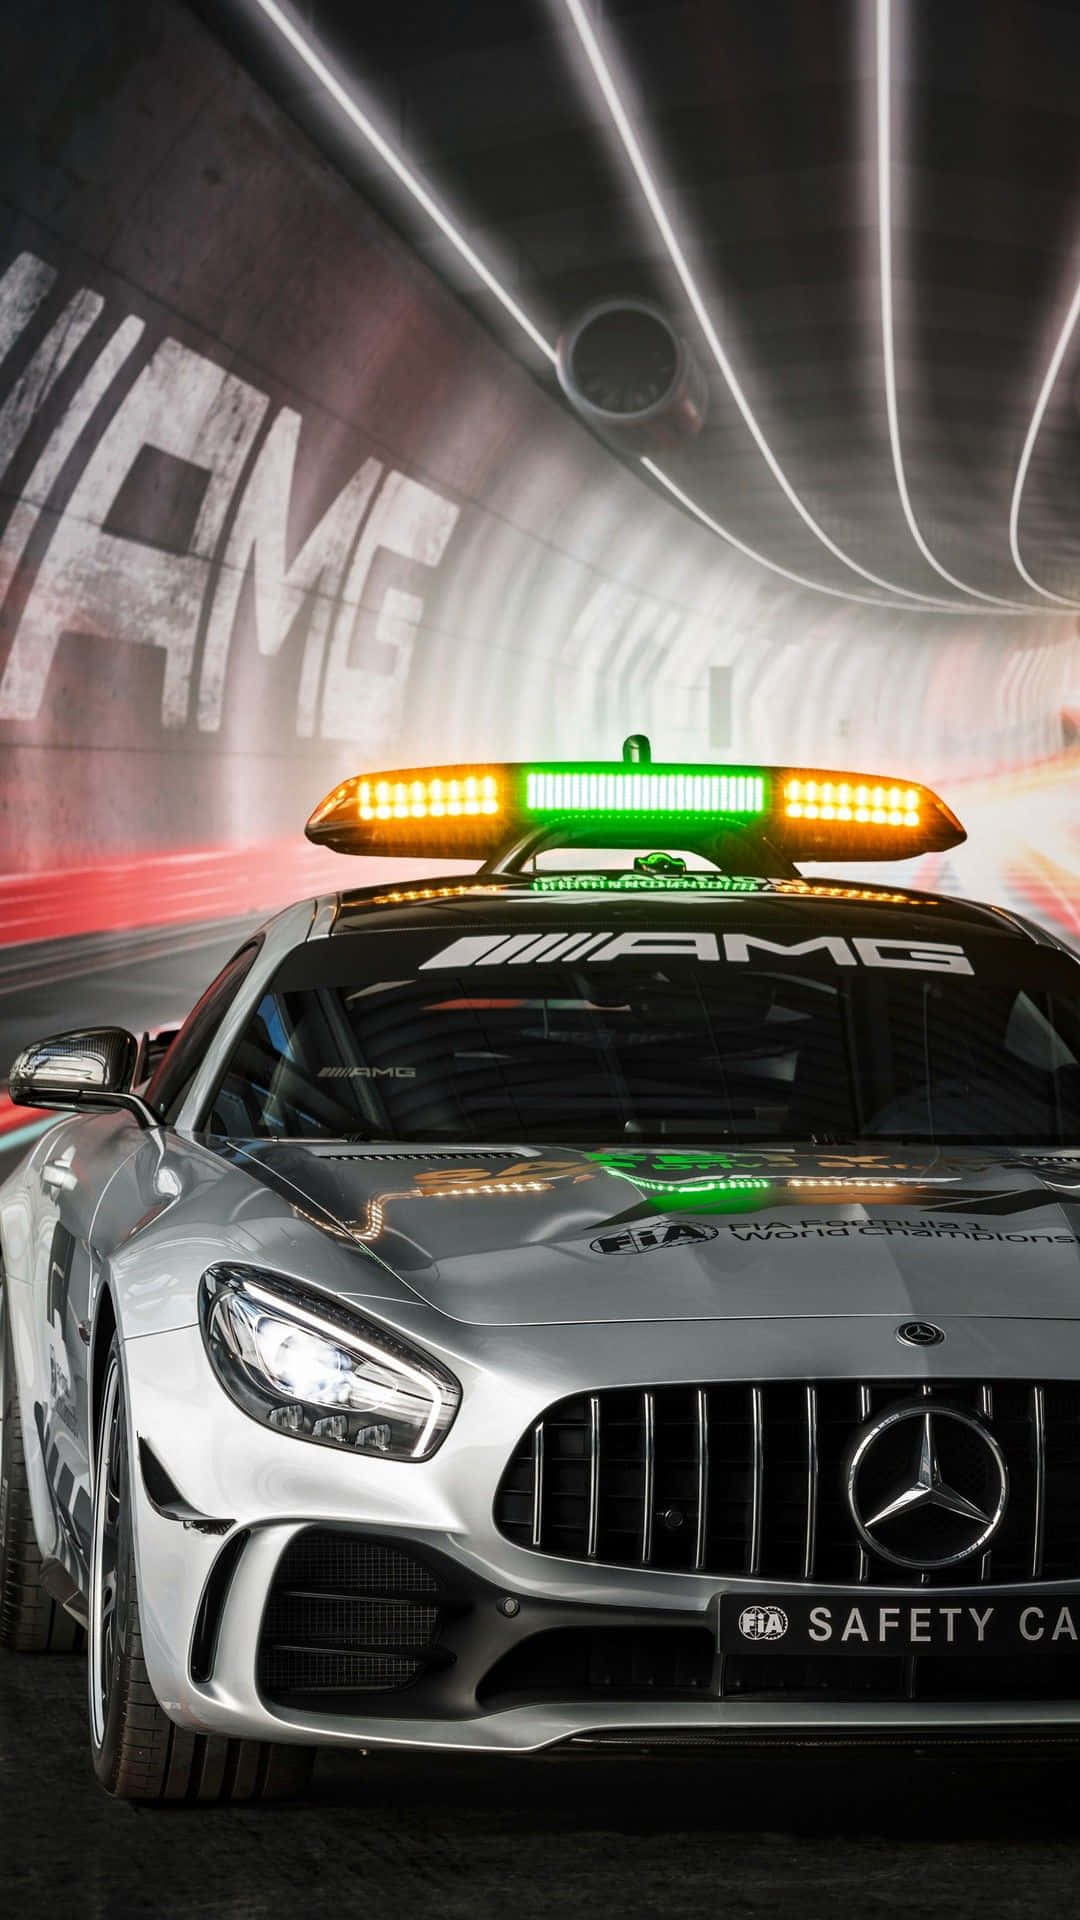 Mercedesamg Gt-class Safety Car In Un Tunnel